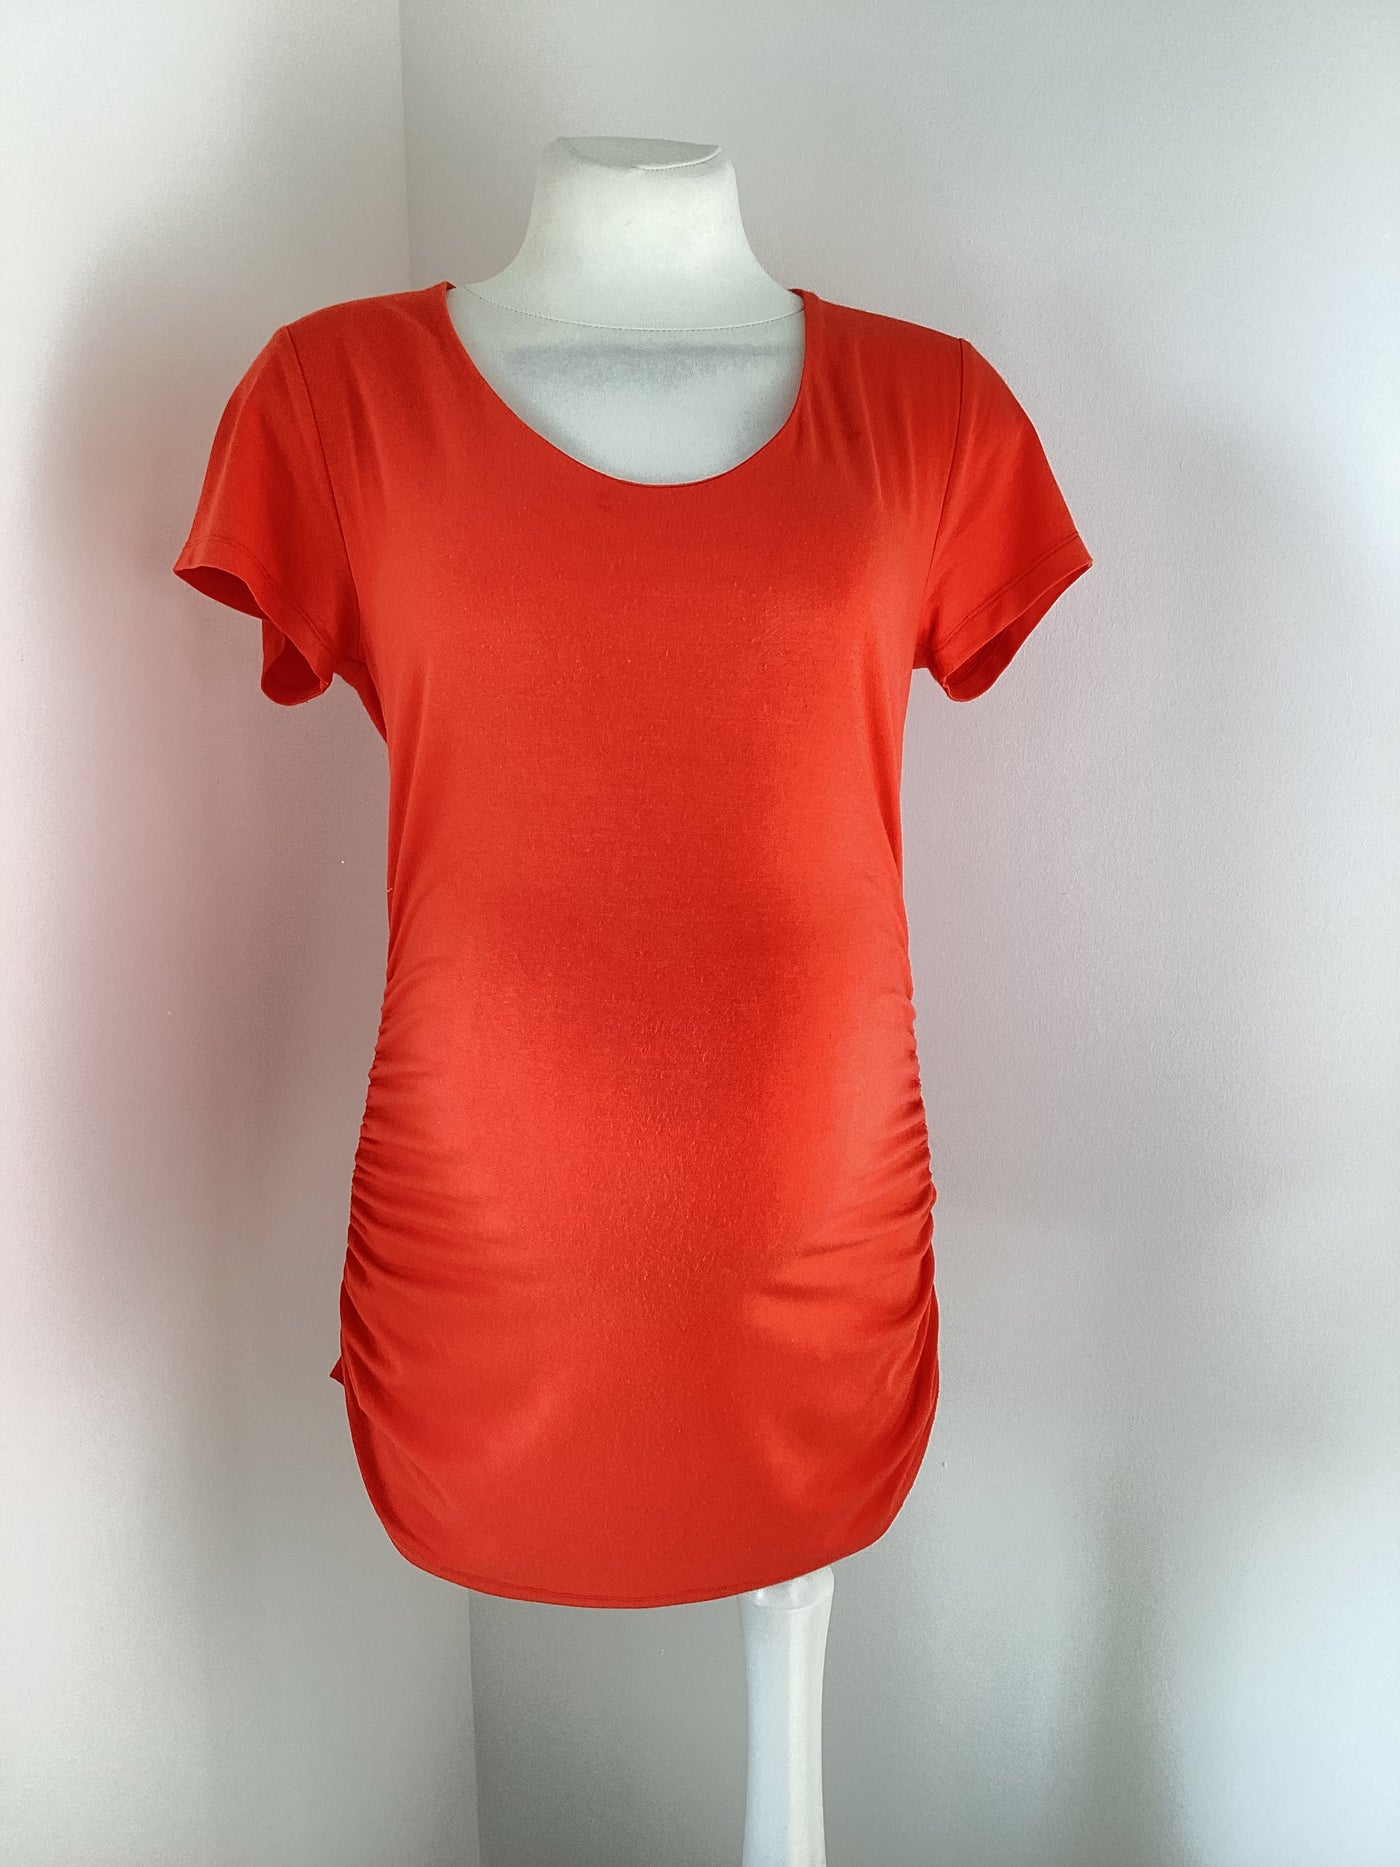 Isabella Oliver orange stretch top - Size 4 (Approx UK 14)